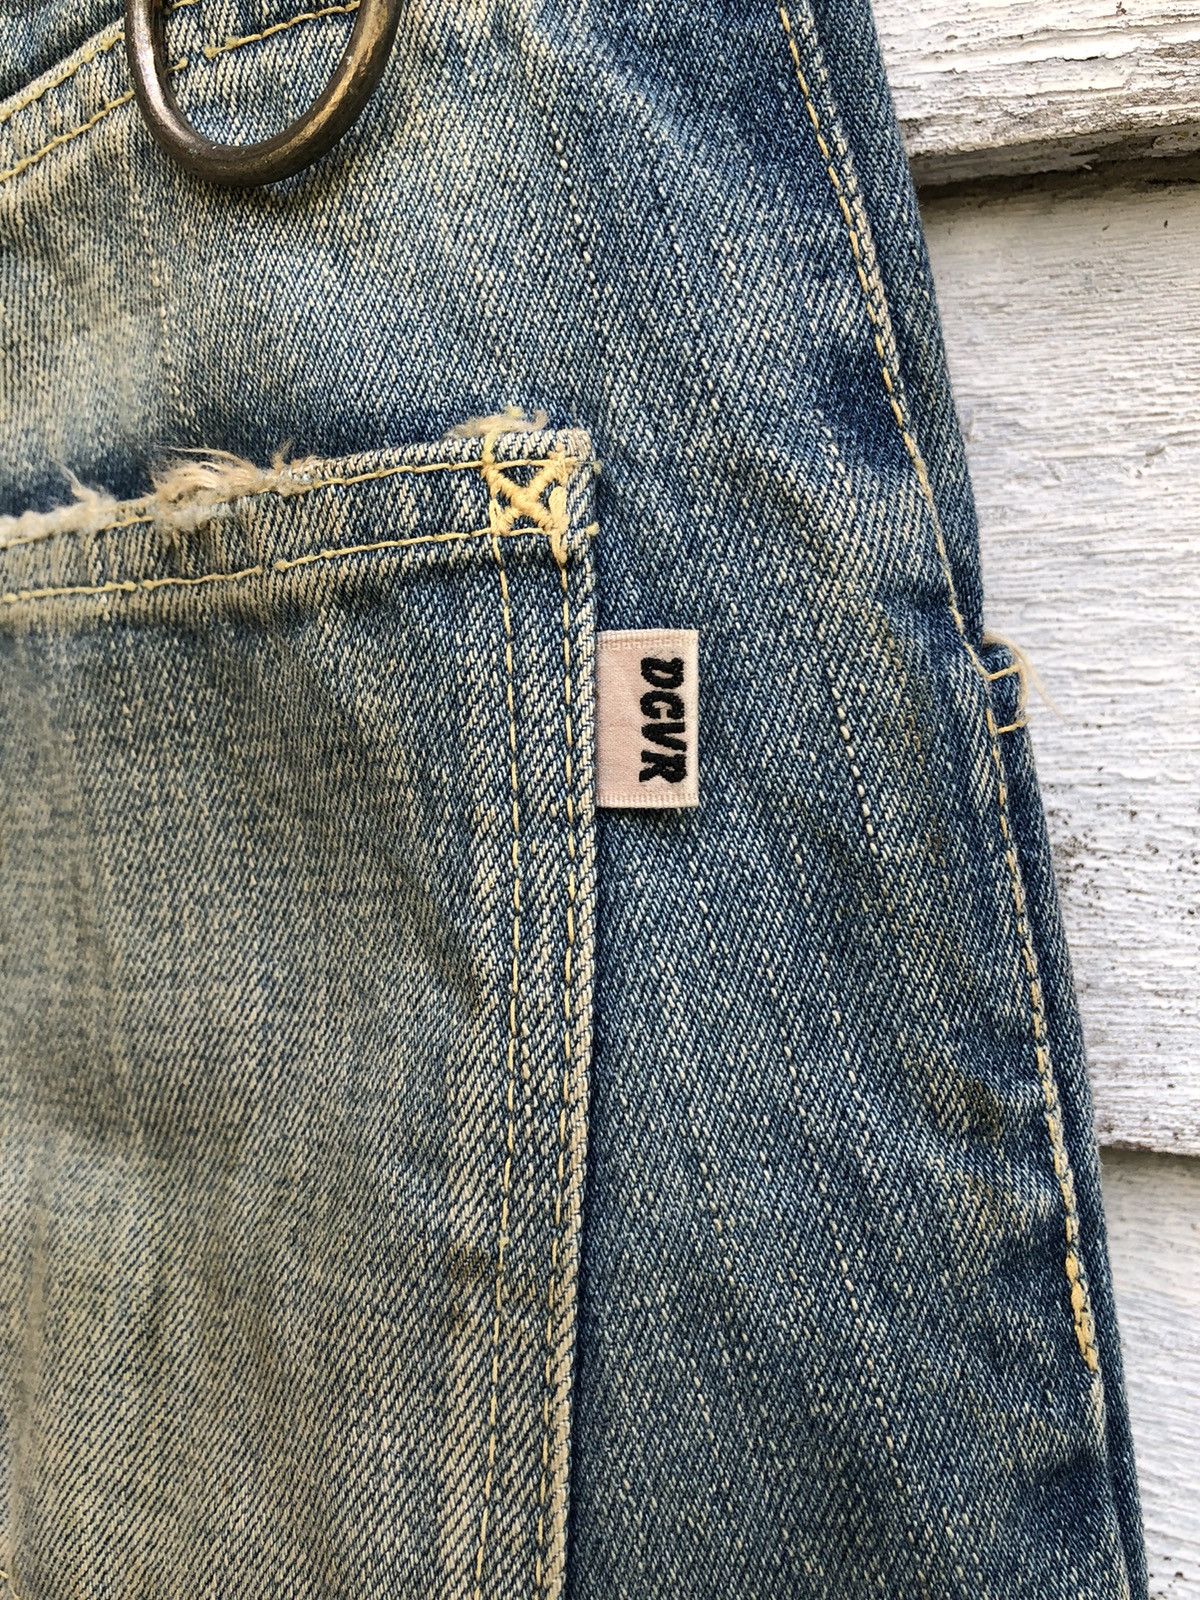 💯Felir💯Discovered Distressed Bush Pocket Pant Jean - 9